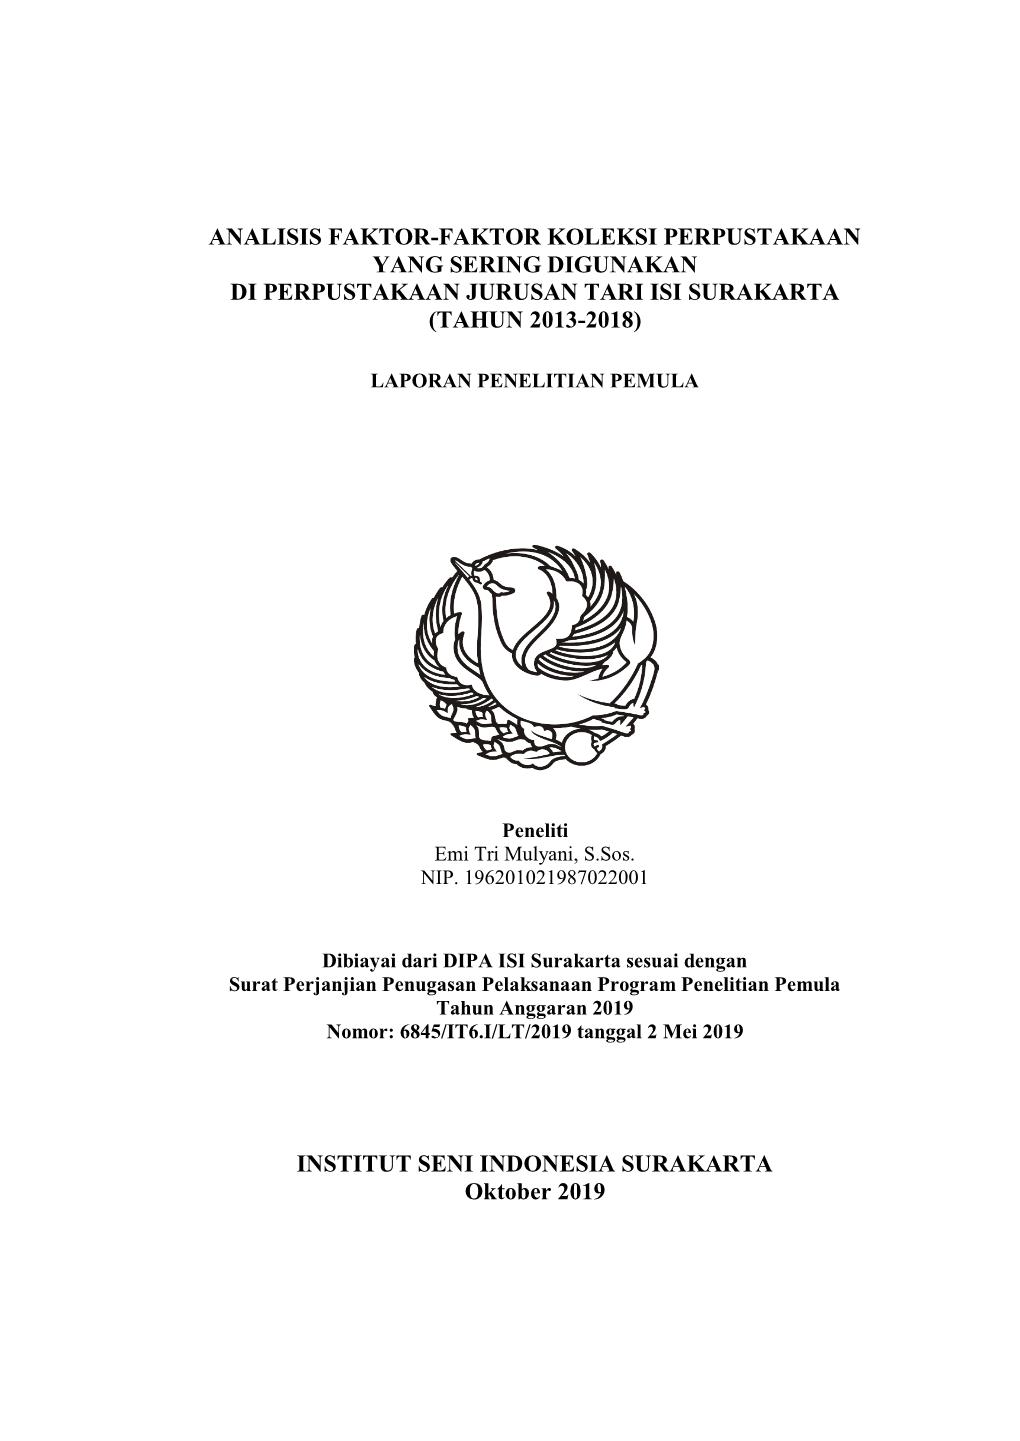 Analisis Faktor-Faktor Koleksi Perpustakaan Yang Sering Digunakan Di Perpustakaan Jurusan Tari Isi Surakarta (Tahun 2013-2018)